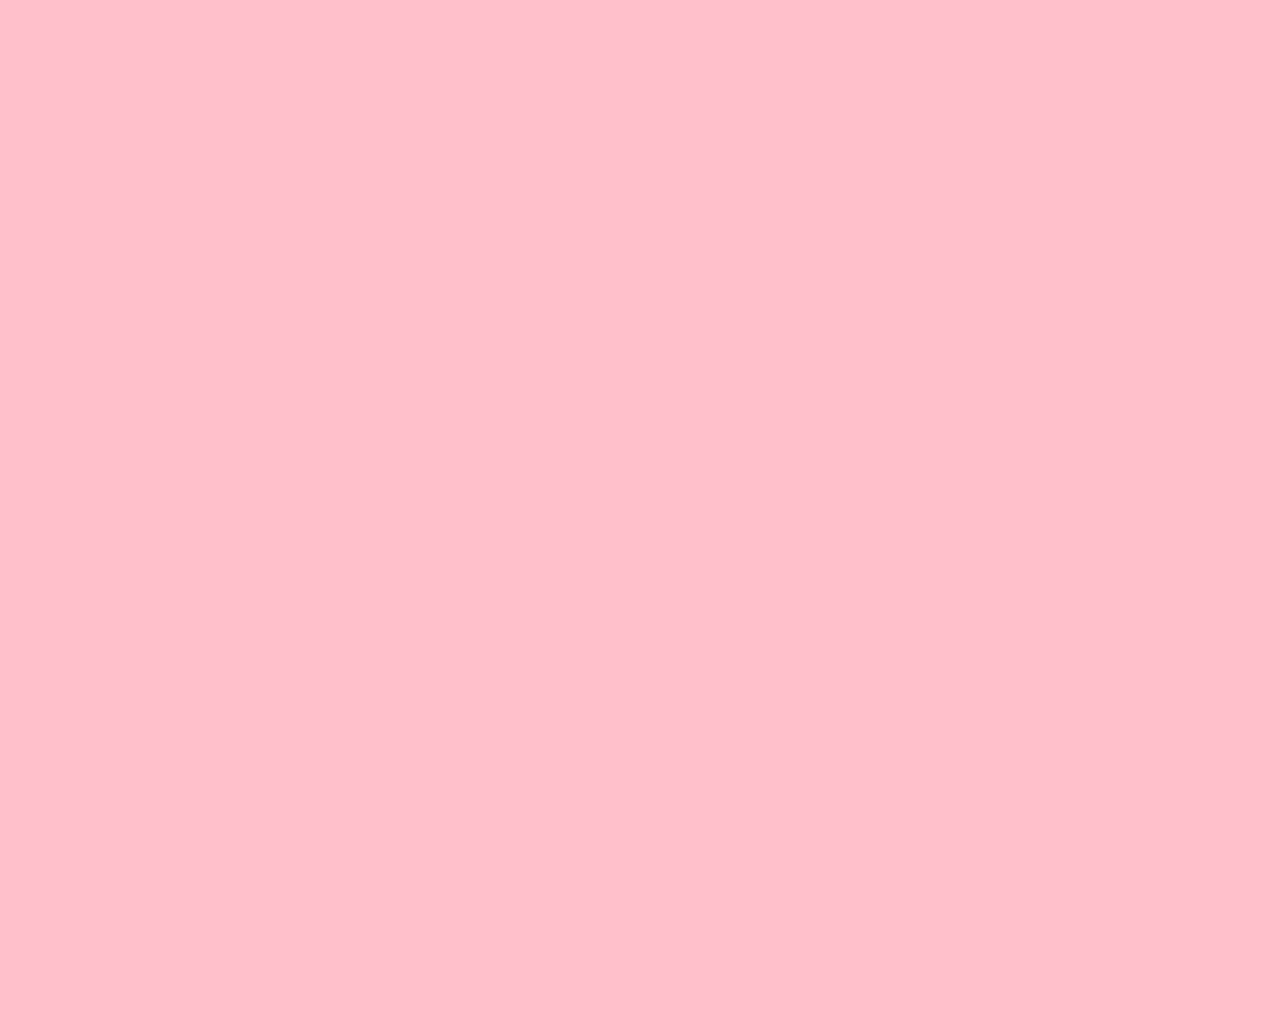  76 Wallpaper  Warna  Pink  Pickini